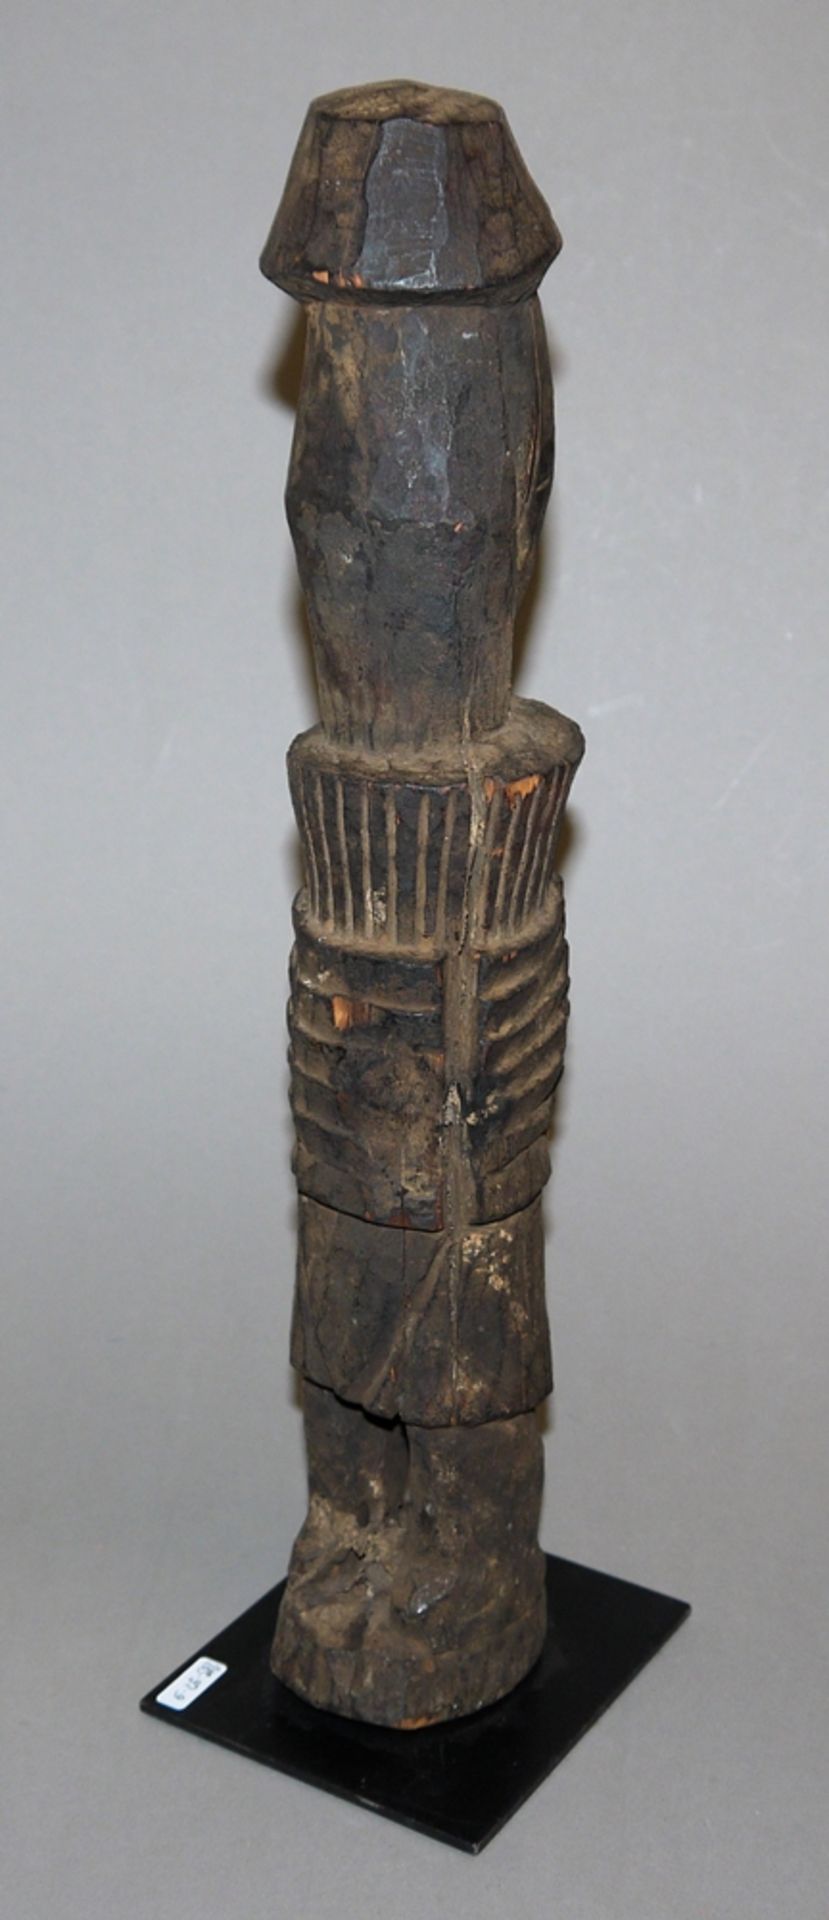 Ikenga, Schutzfigur der Igbo/Urhobu, Nigeria - Image 2 of 2